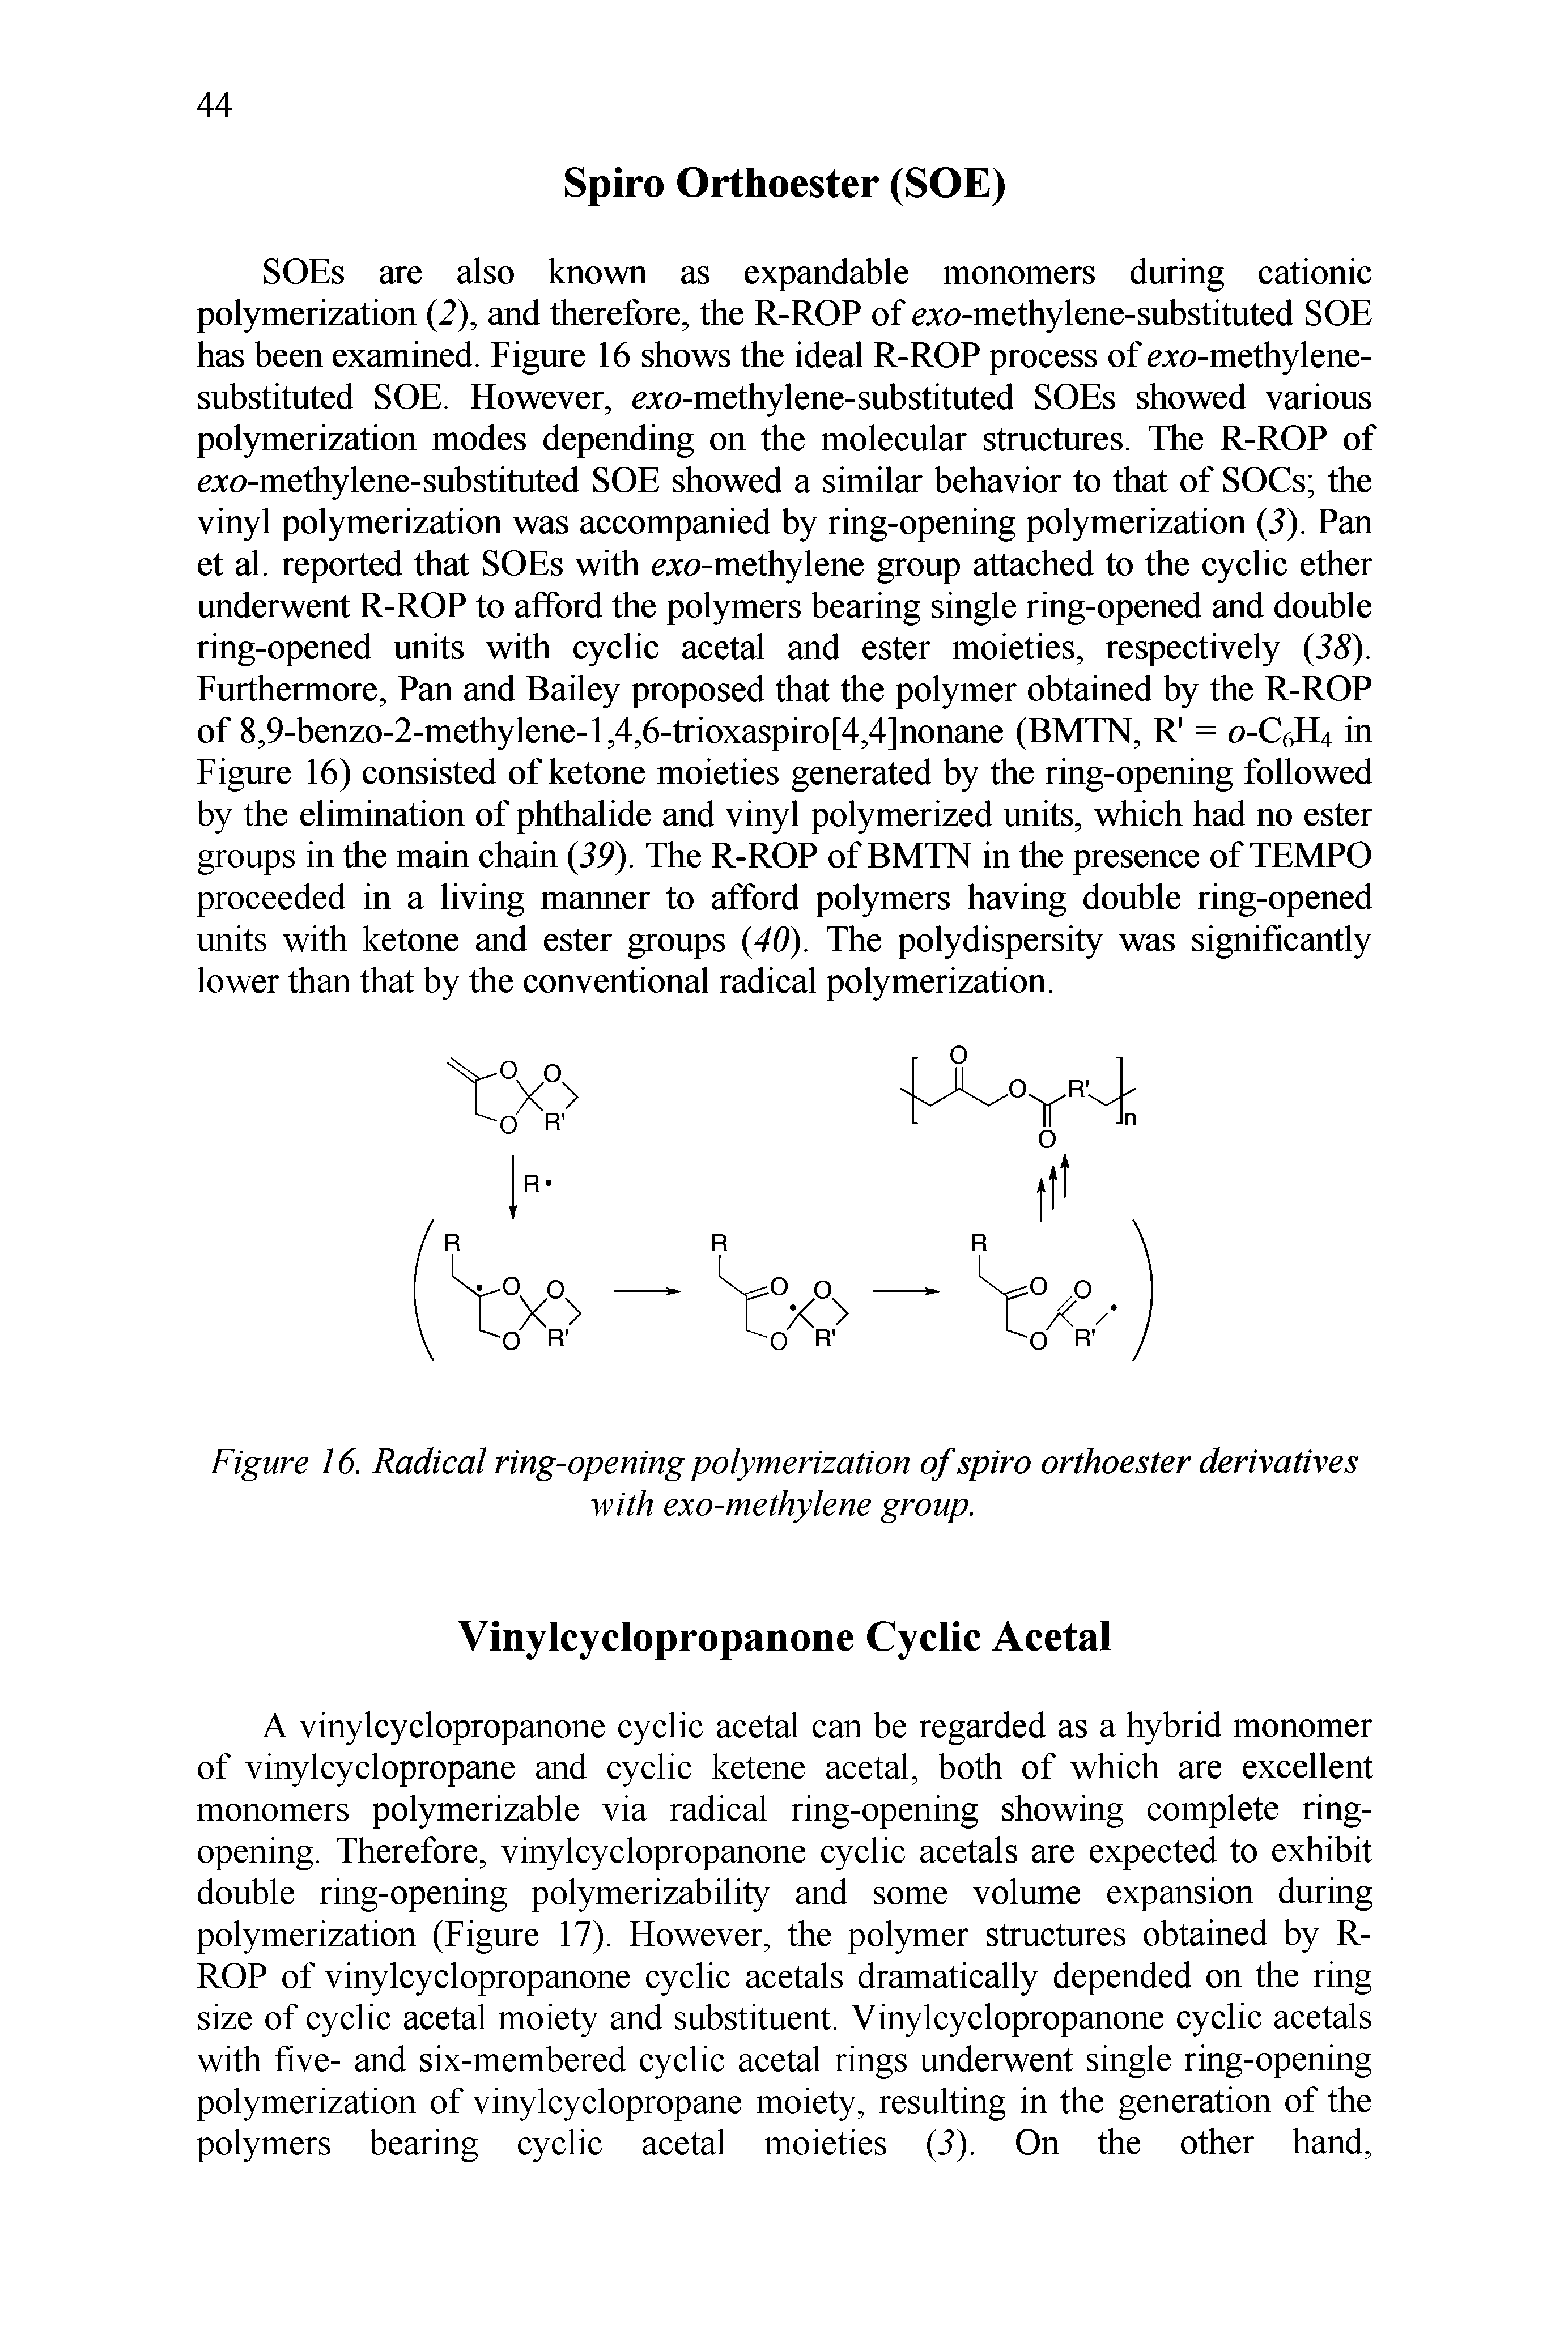 Figure 16. Radical ring-opening polymerization of spiro orthoester derivatives with exo-methylene group.